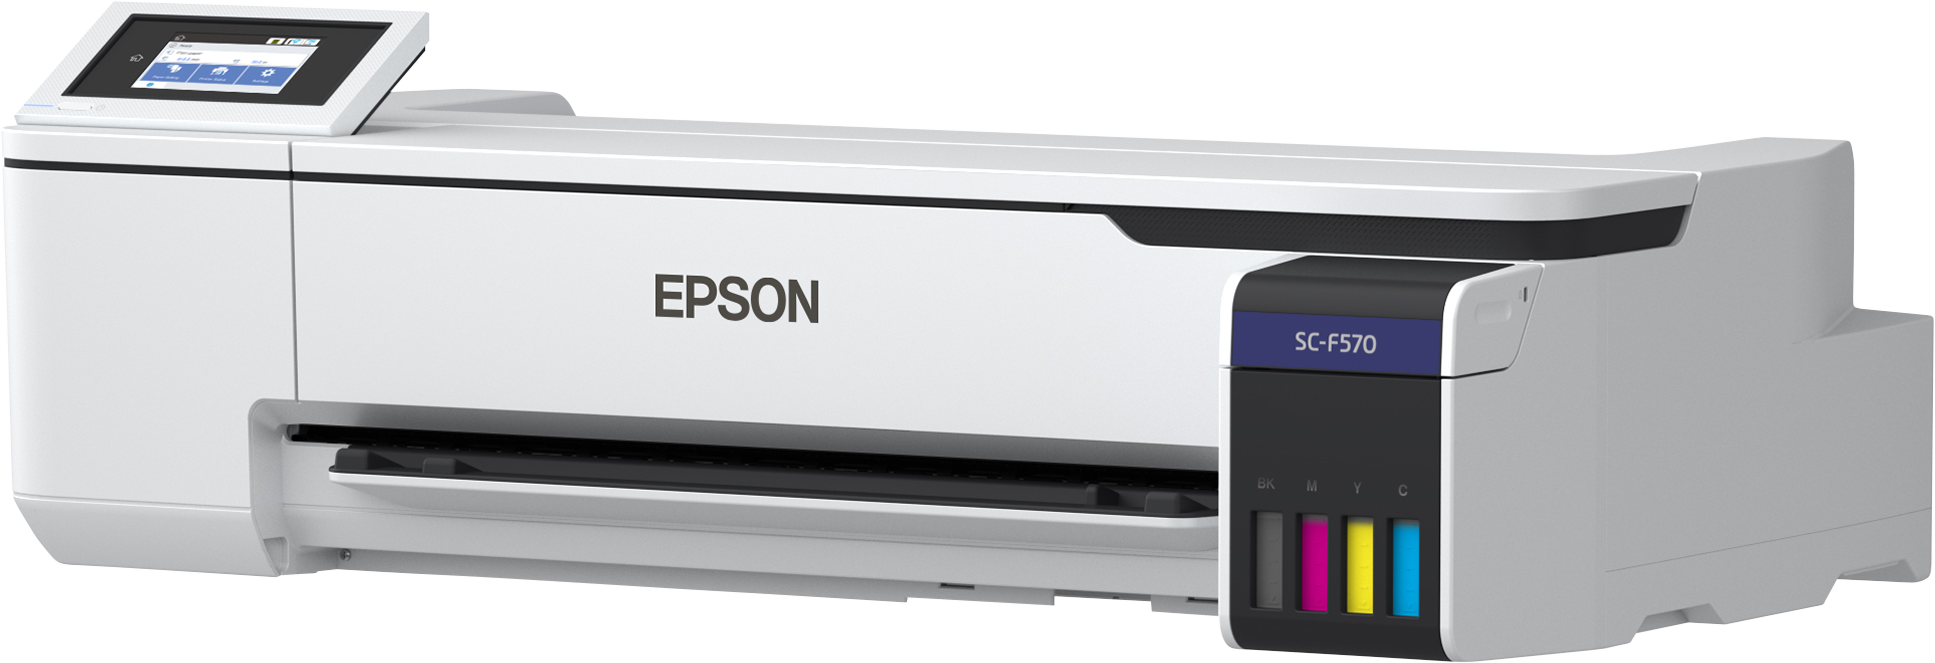 epson sublimation printer f570